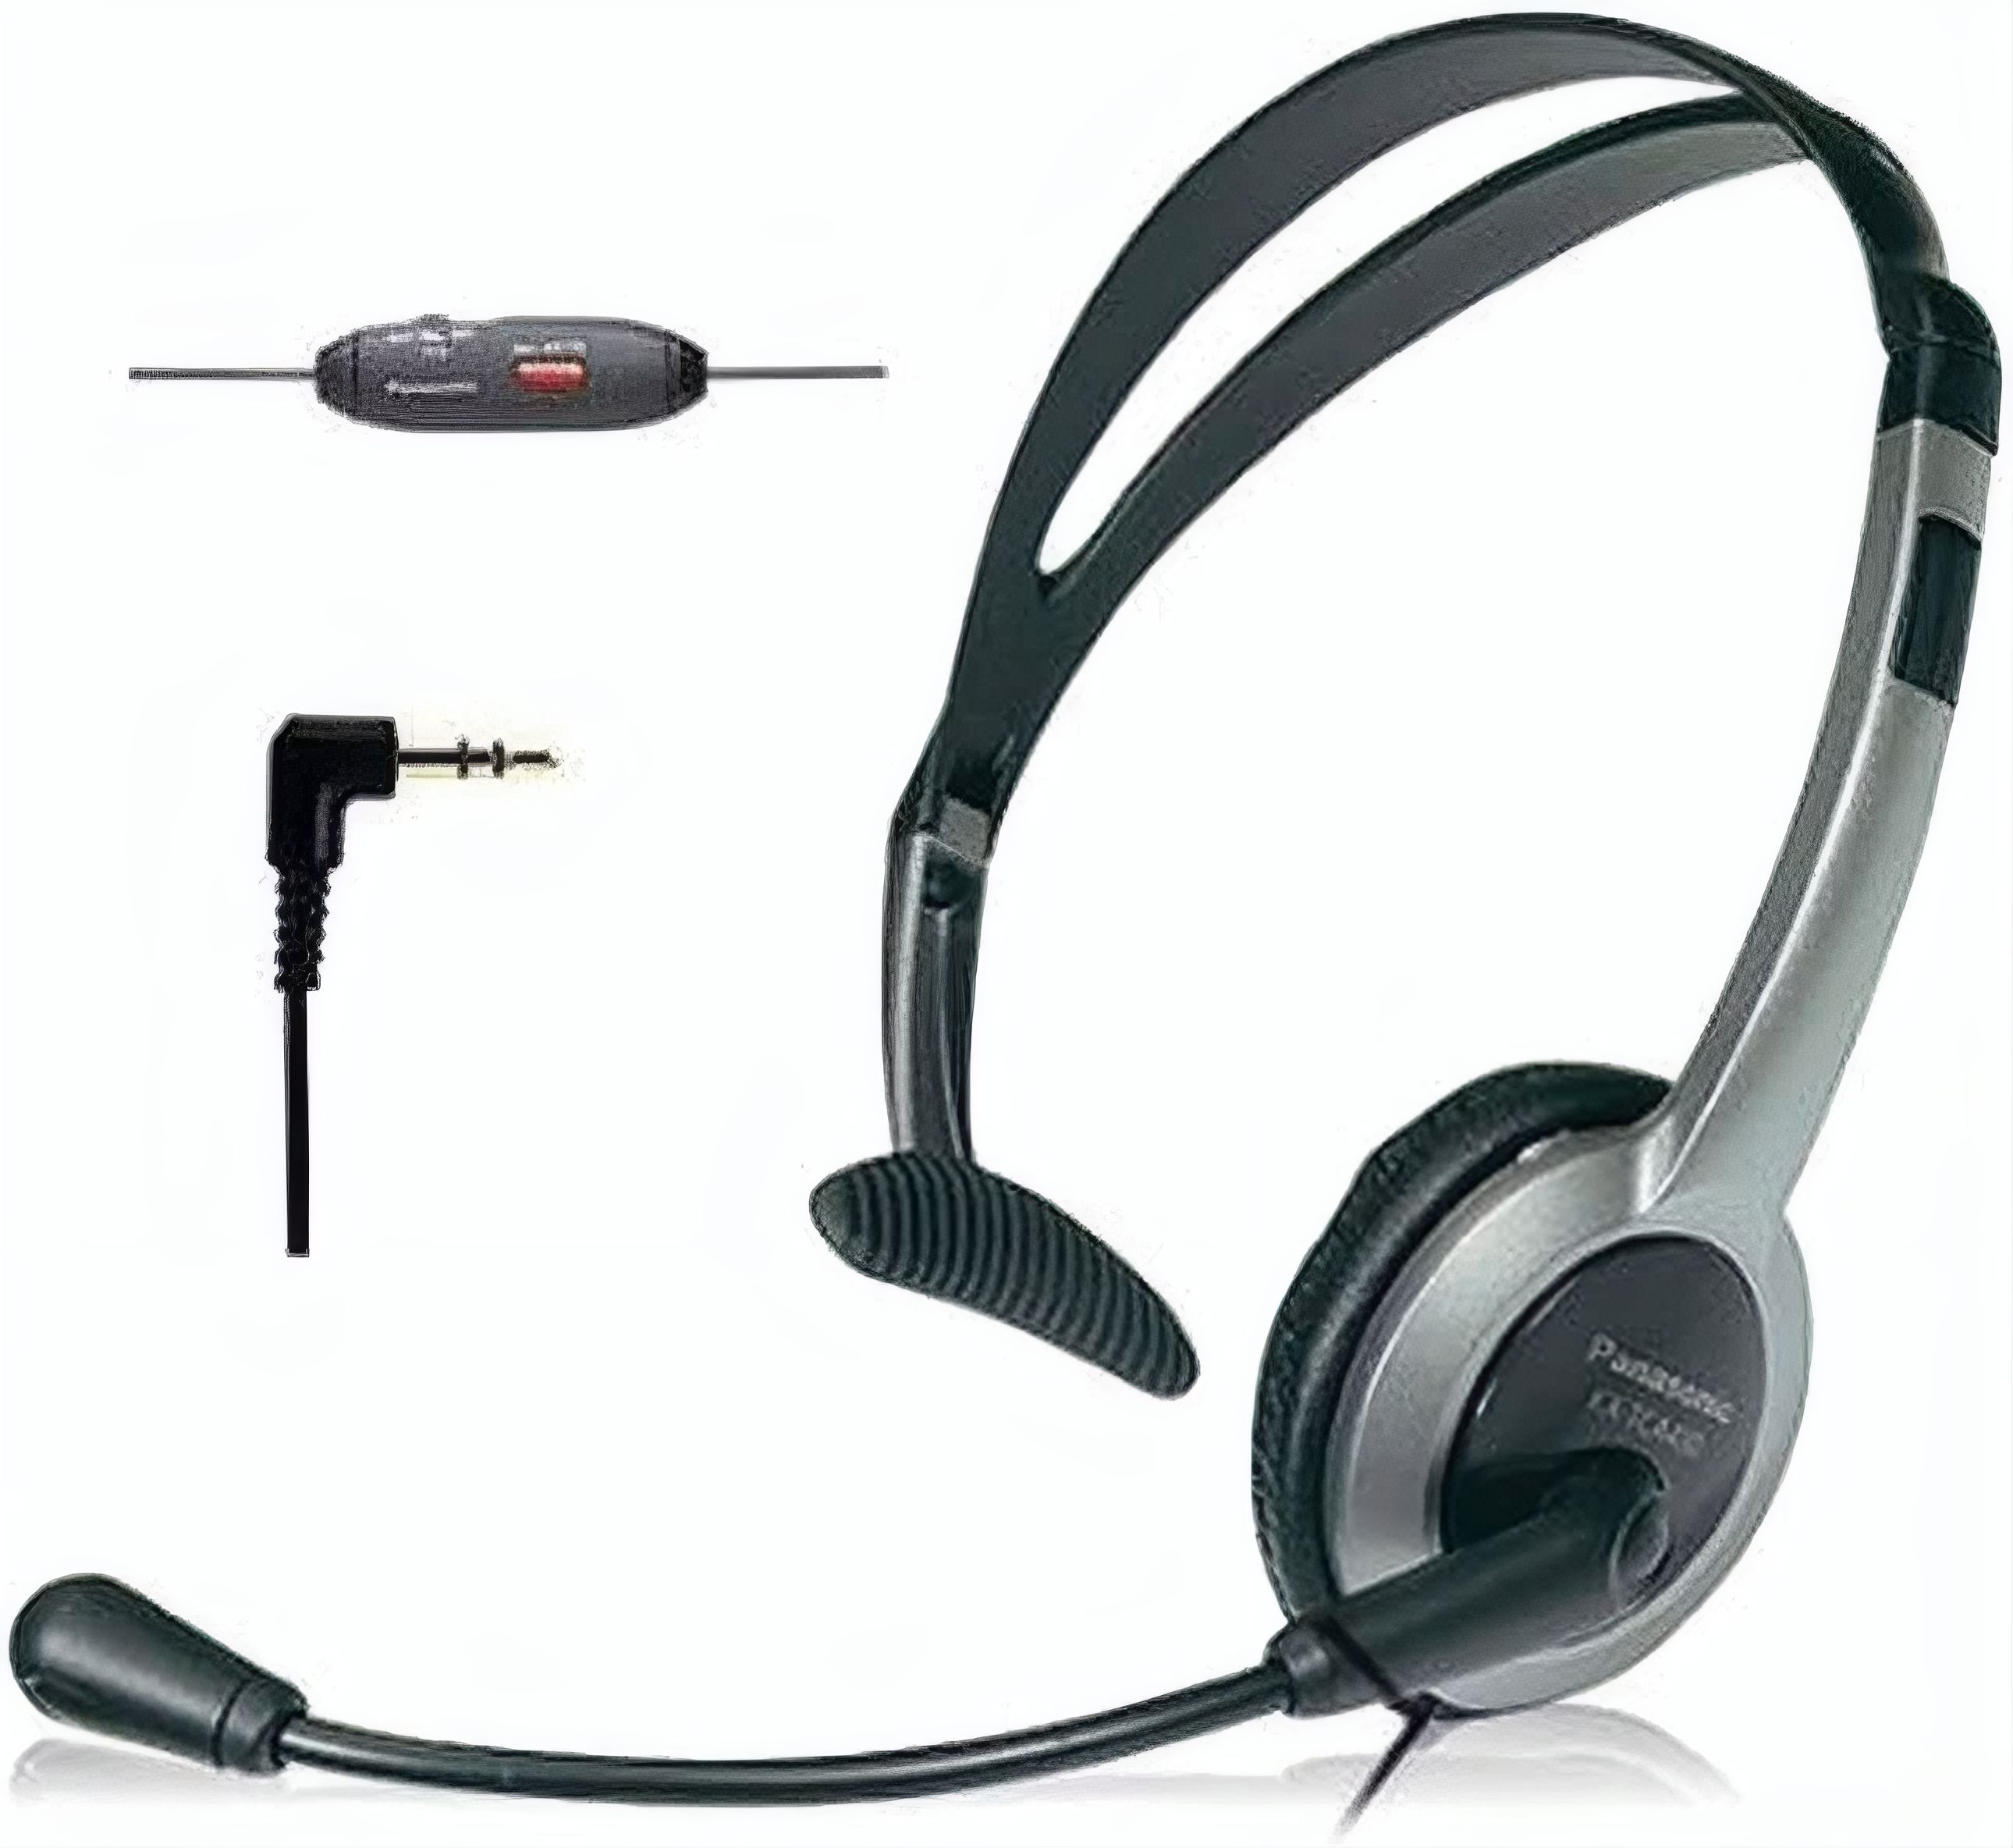 Microphone flexible - KXTCA430 - Panasonic